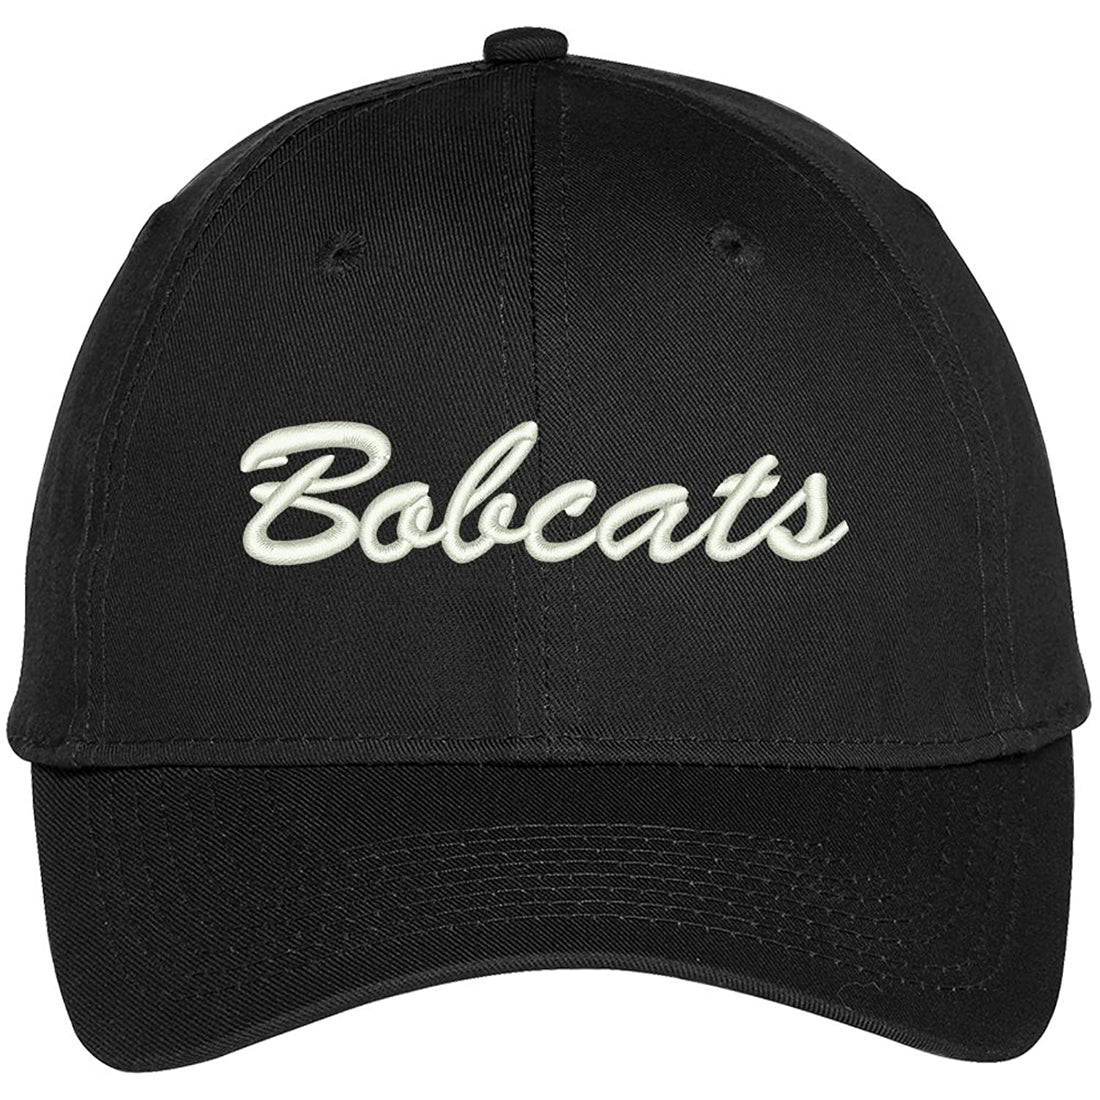 Trendy Apparel Shop Bobcats Embroidered Team Nickname Mascot Cap